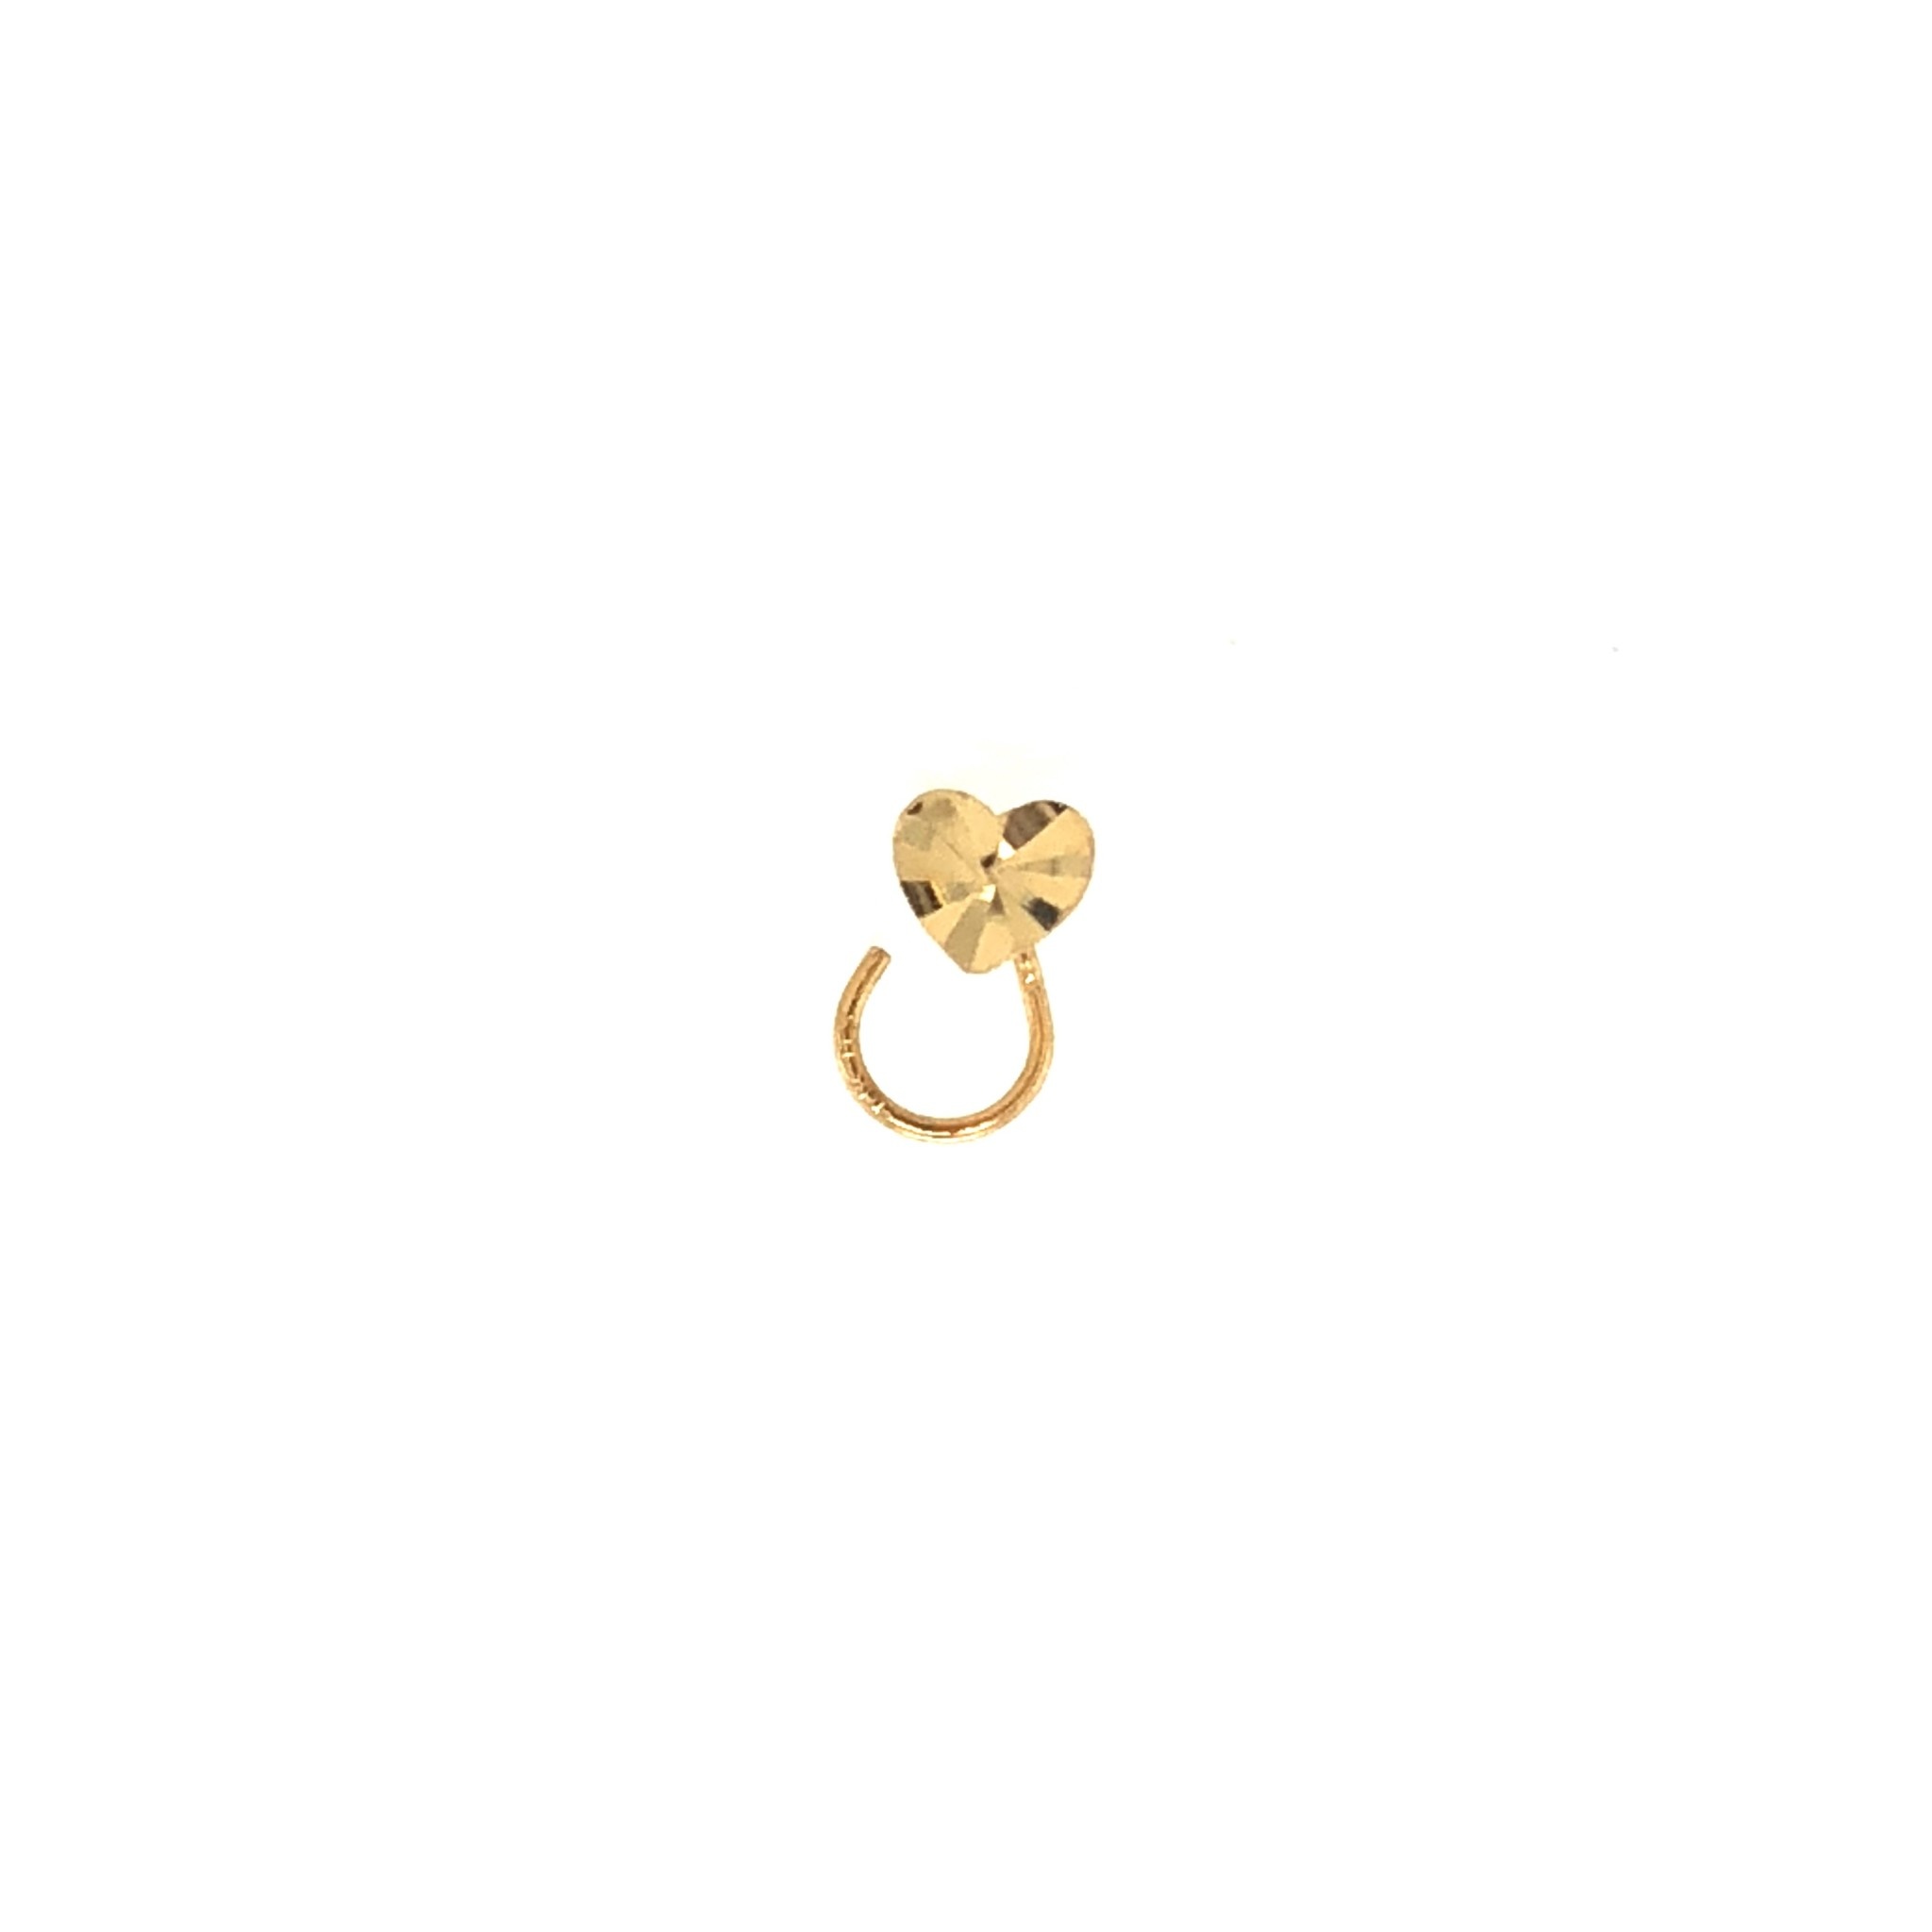 14Kt Rose Gold Nose Ring with 0.06ctw Diamonds - 6mm Diameter 22G Diamond  Nose Hoop - Cartilage Hoop Earring - RGDIA - Walmart.com